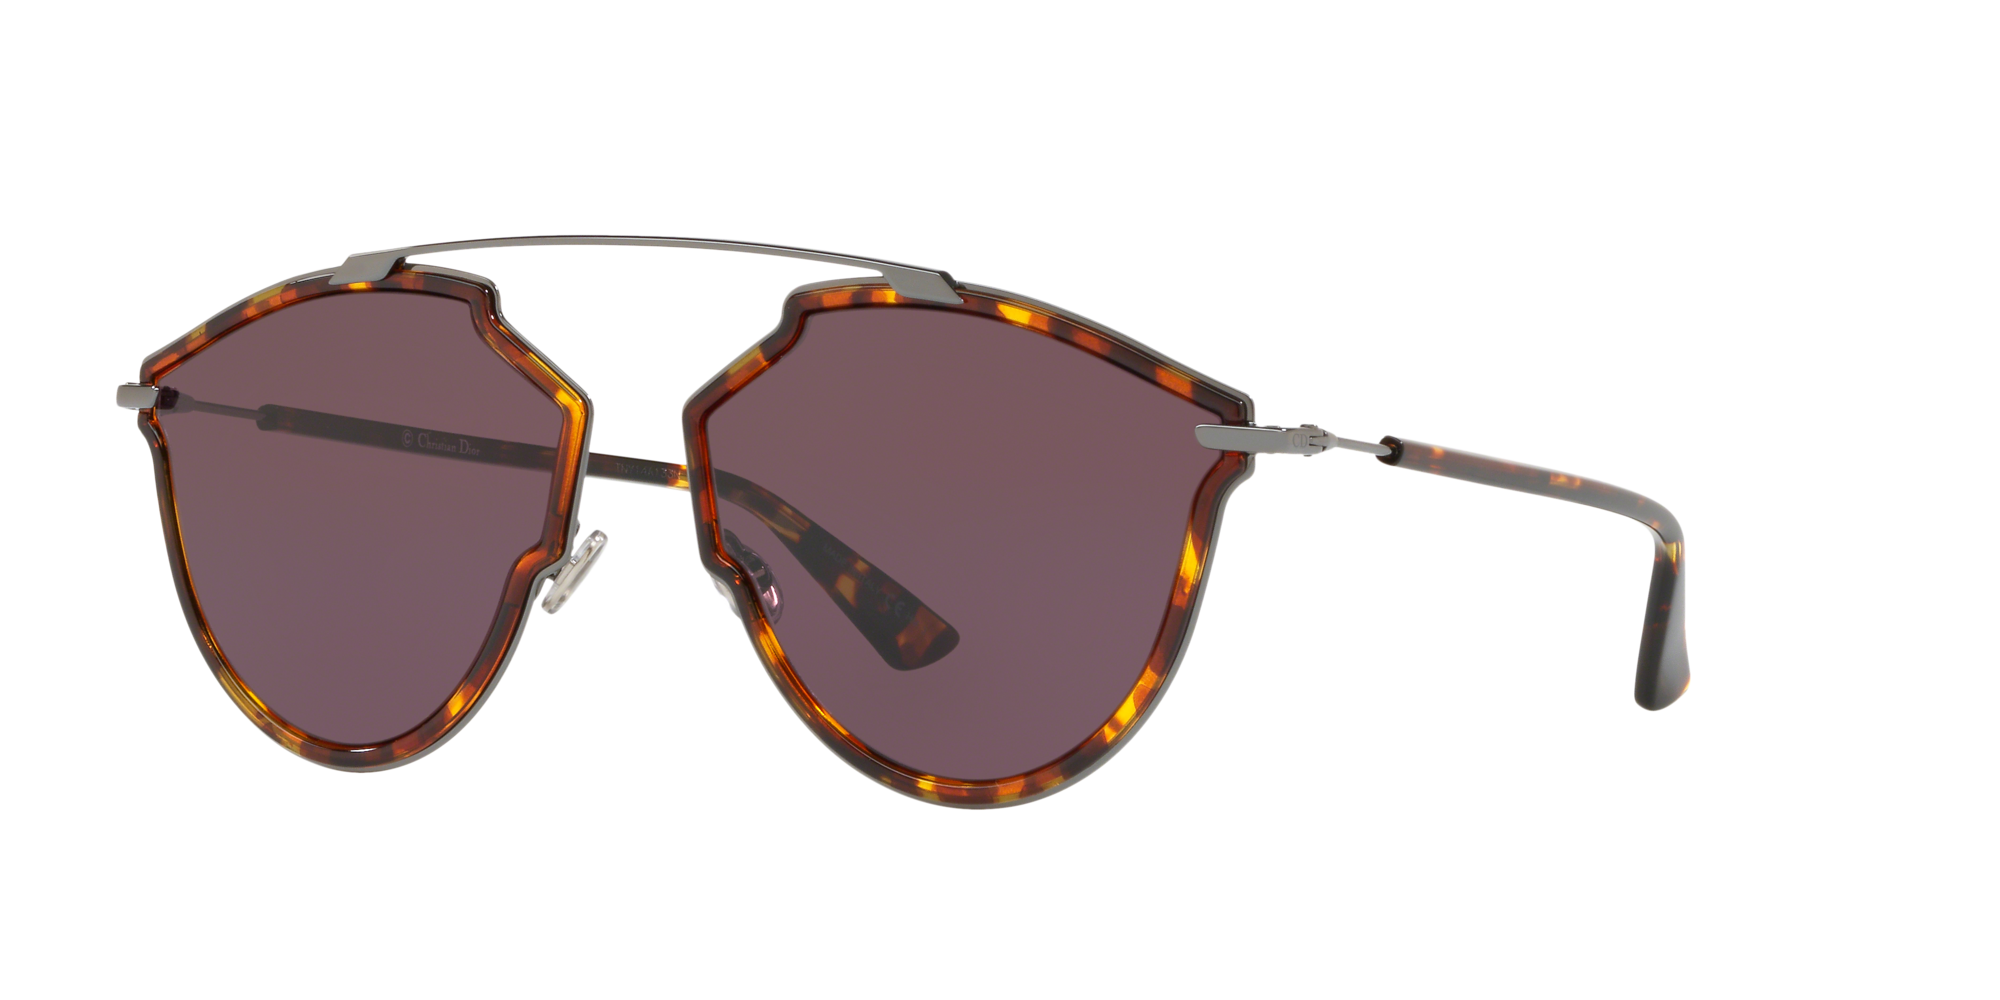 diorsorealrise sunglasses